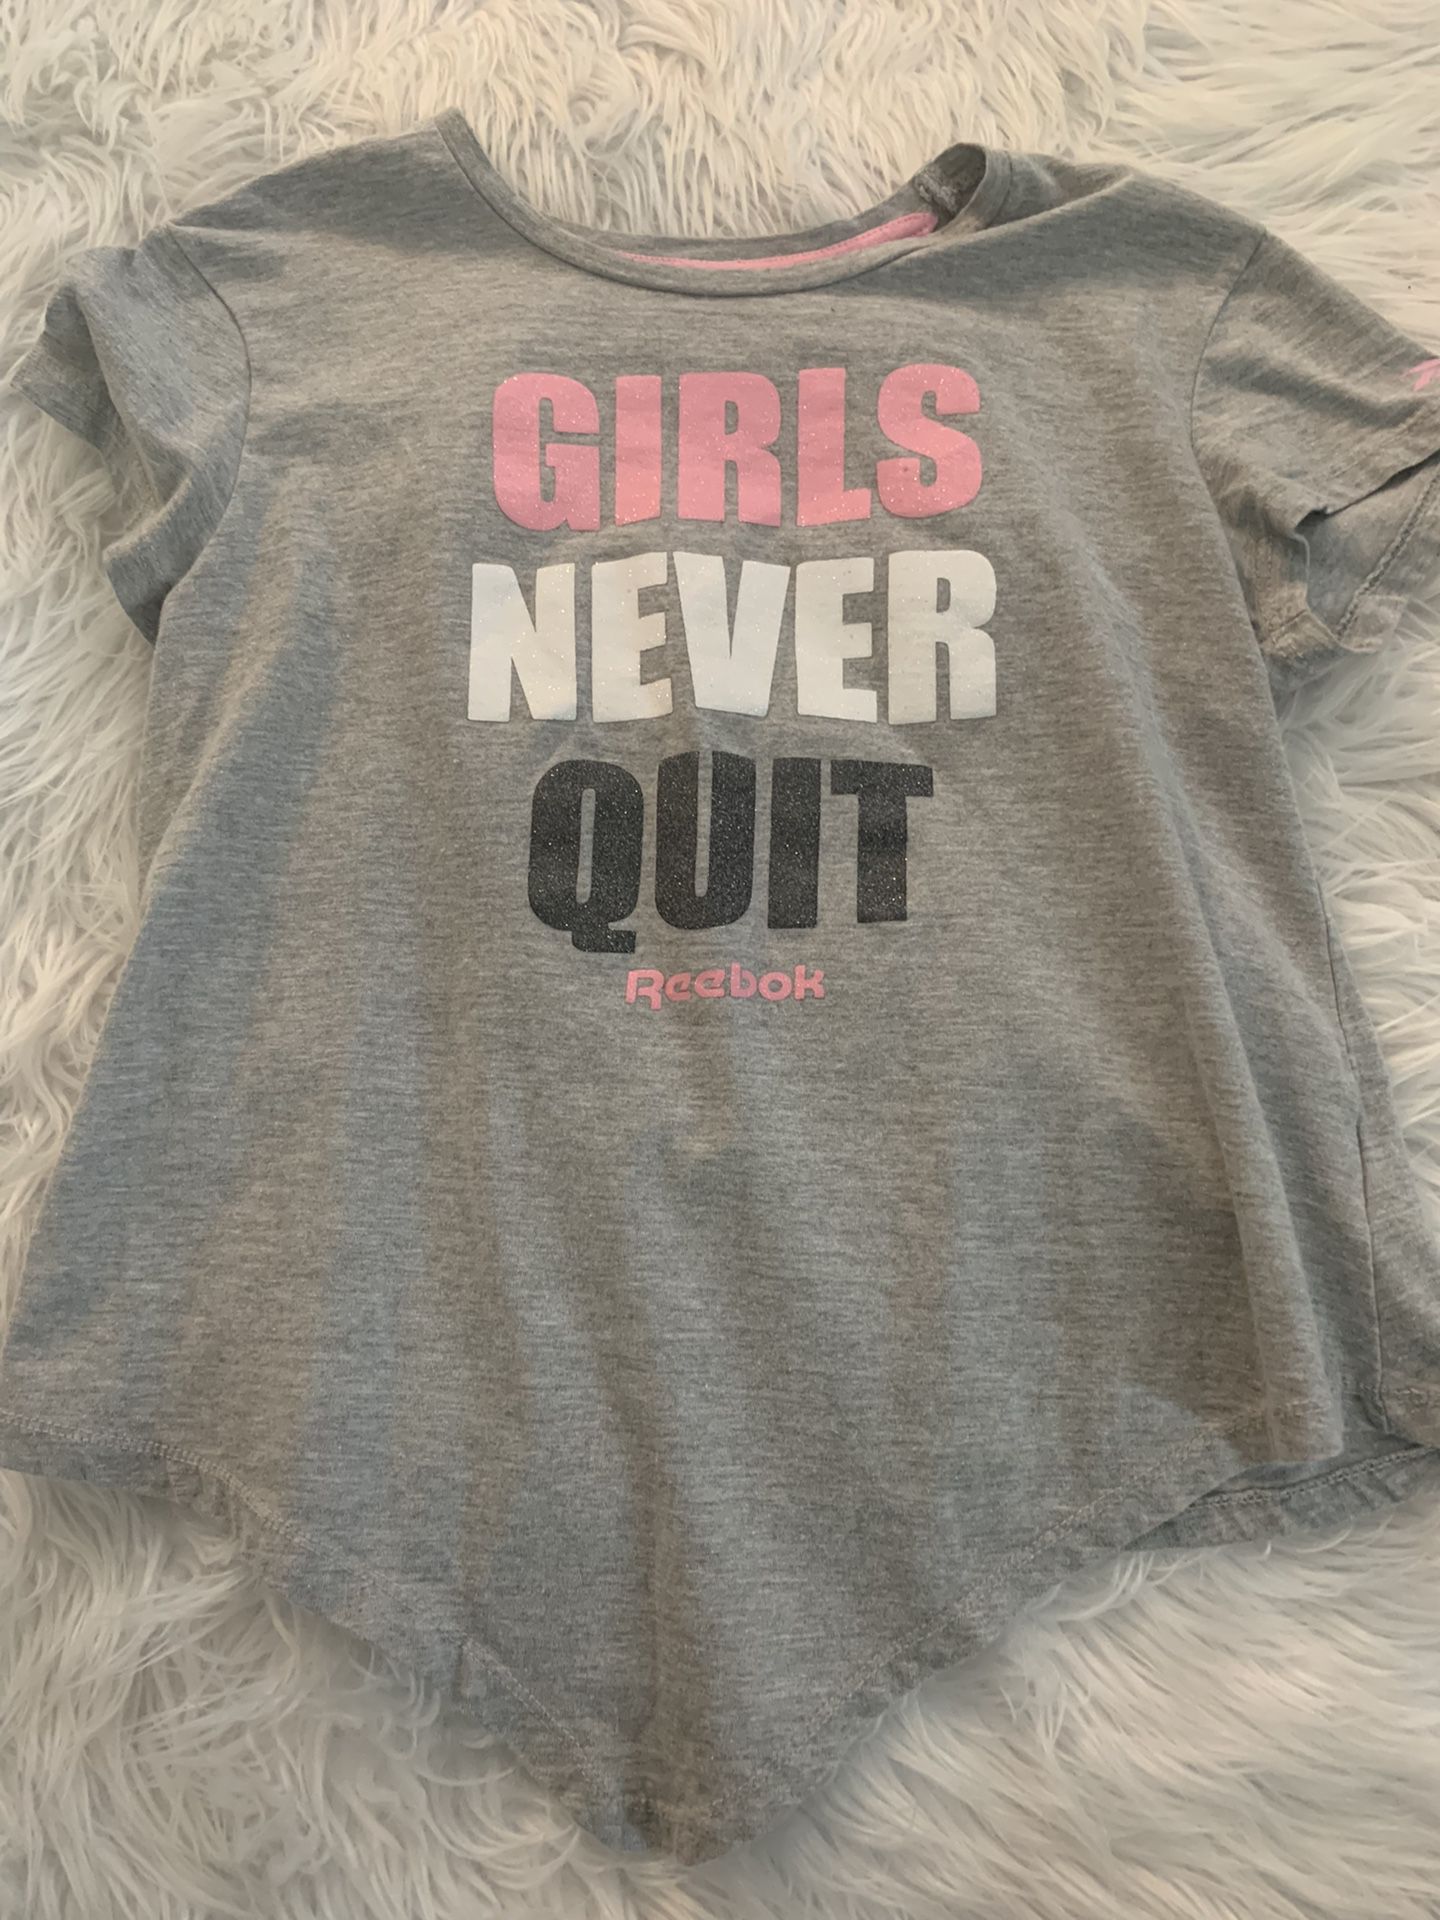 Reebok “Girls Never Quit” Child’s Tie-Front Shirt Medium